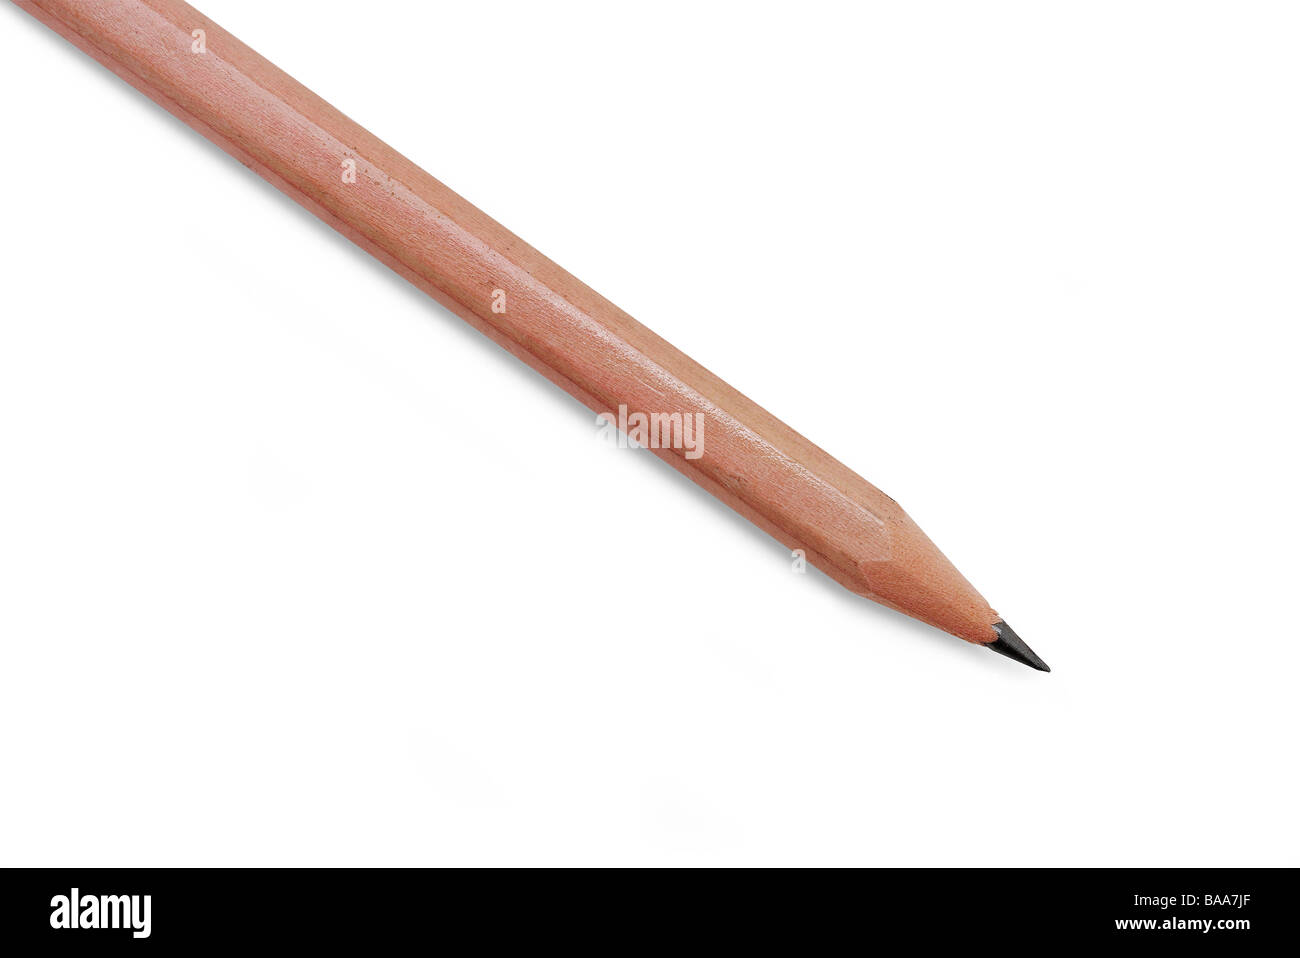 Pencil on a white studio background Stock Photo